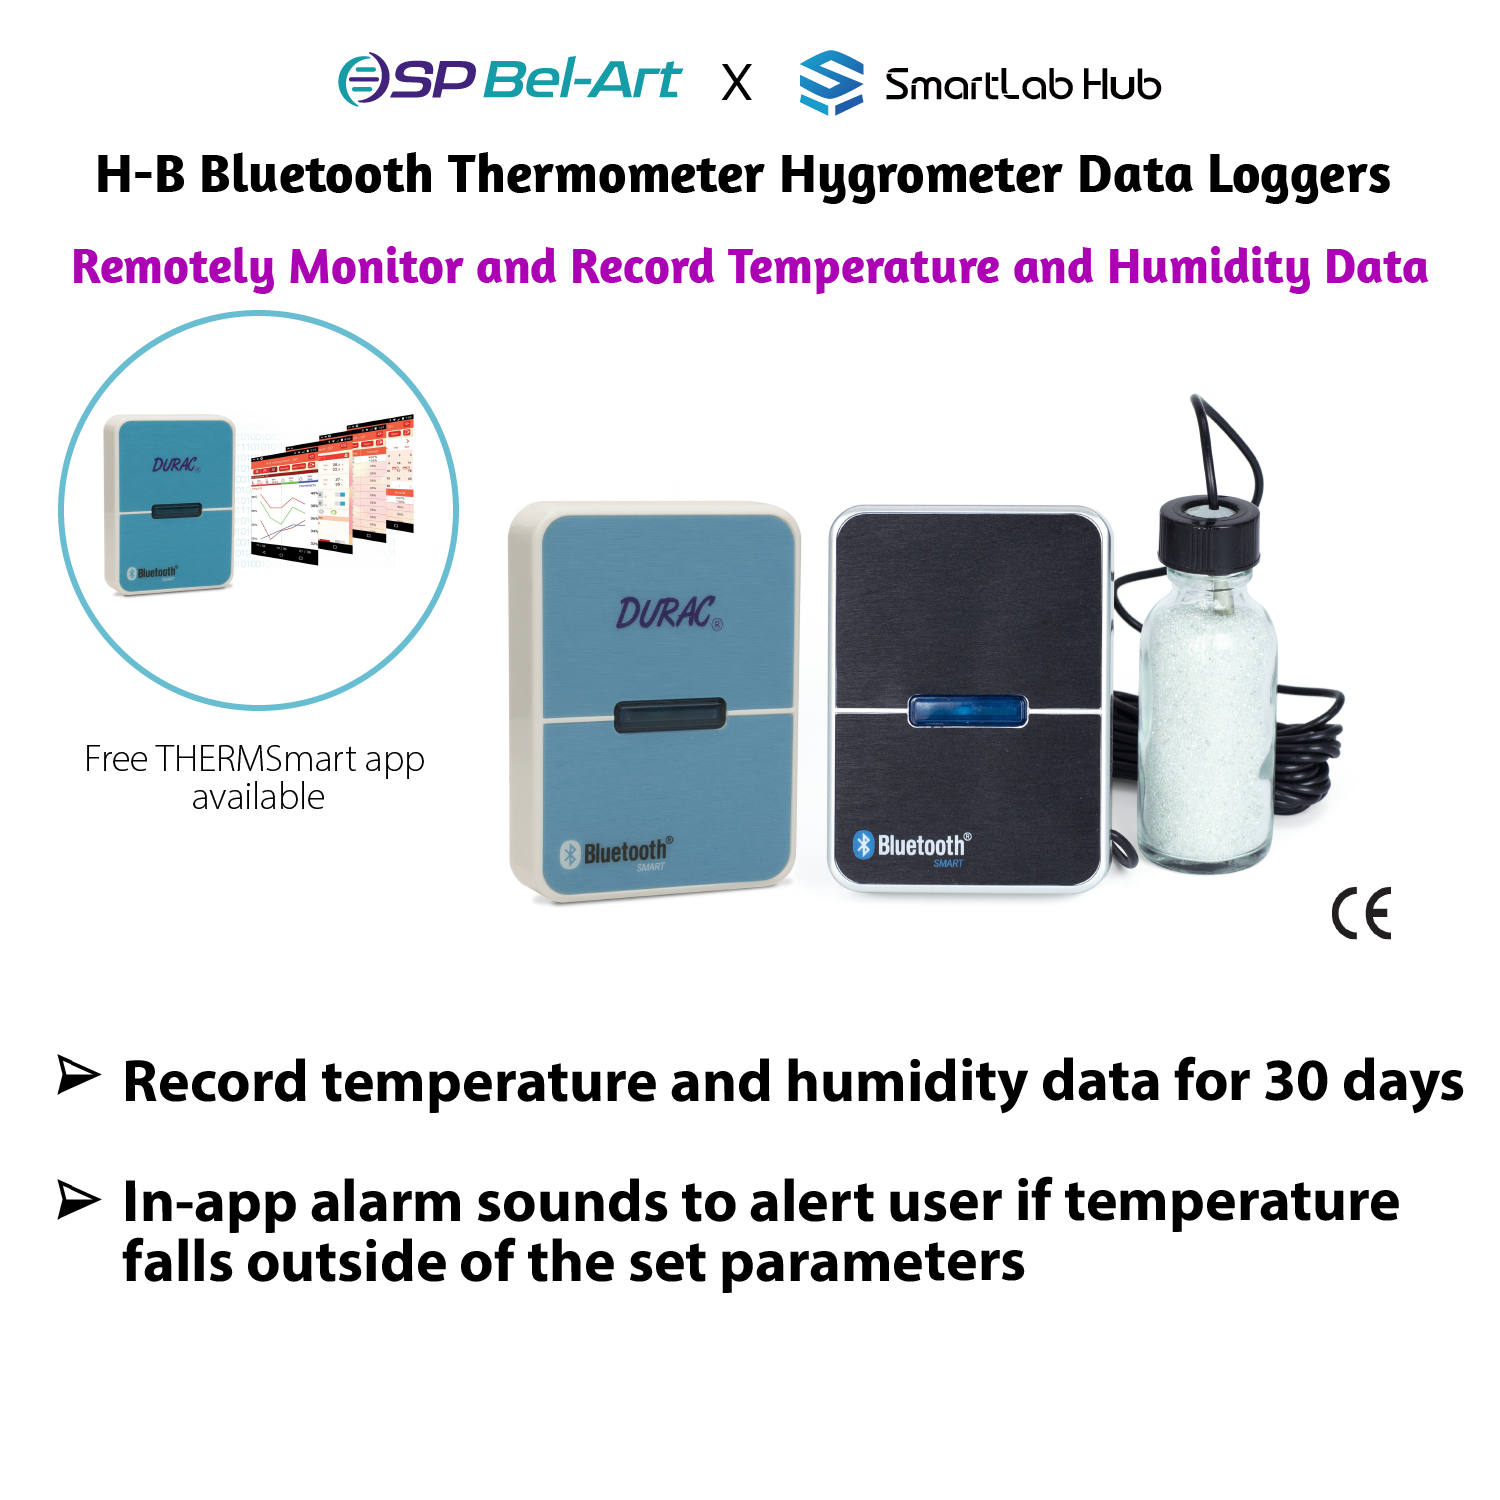 https://www.smartlabhub.com.hk/image/cache/catalog/product/Bel-Art/1_Summary/Bel-Art_H-B_Bluetooth_Thermometer_Hygrometer_Data_Loggers-1500x1500.png